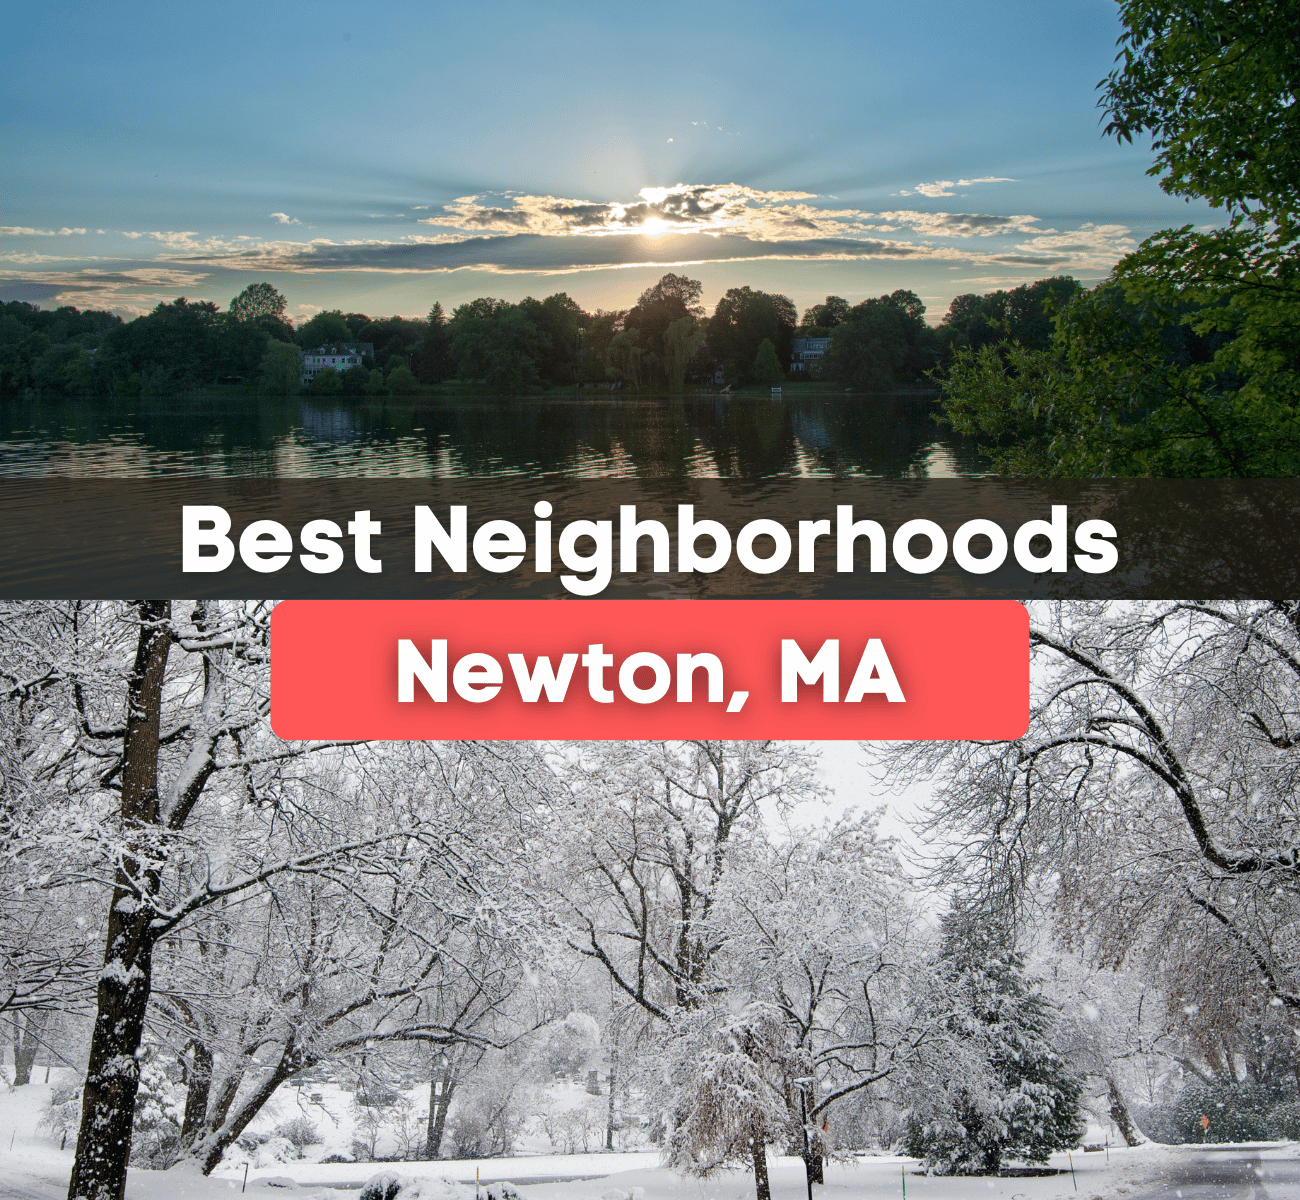 best neighborhoods Newton, MA - snow storm in Newton and Crystal Lake